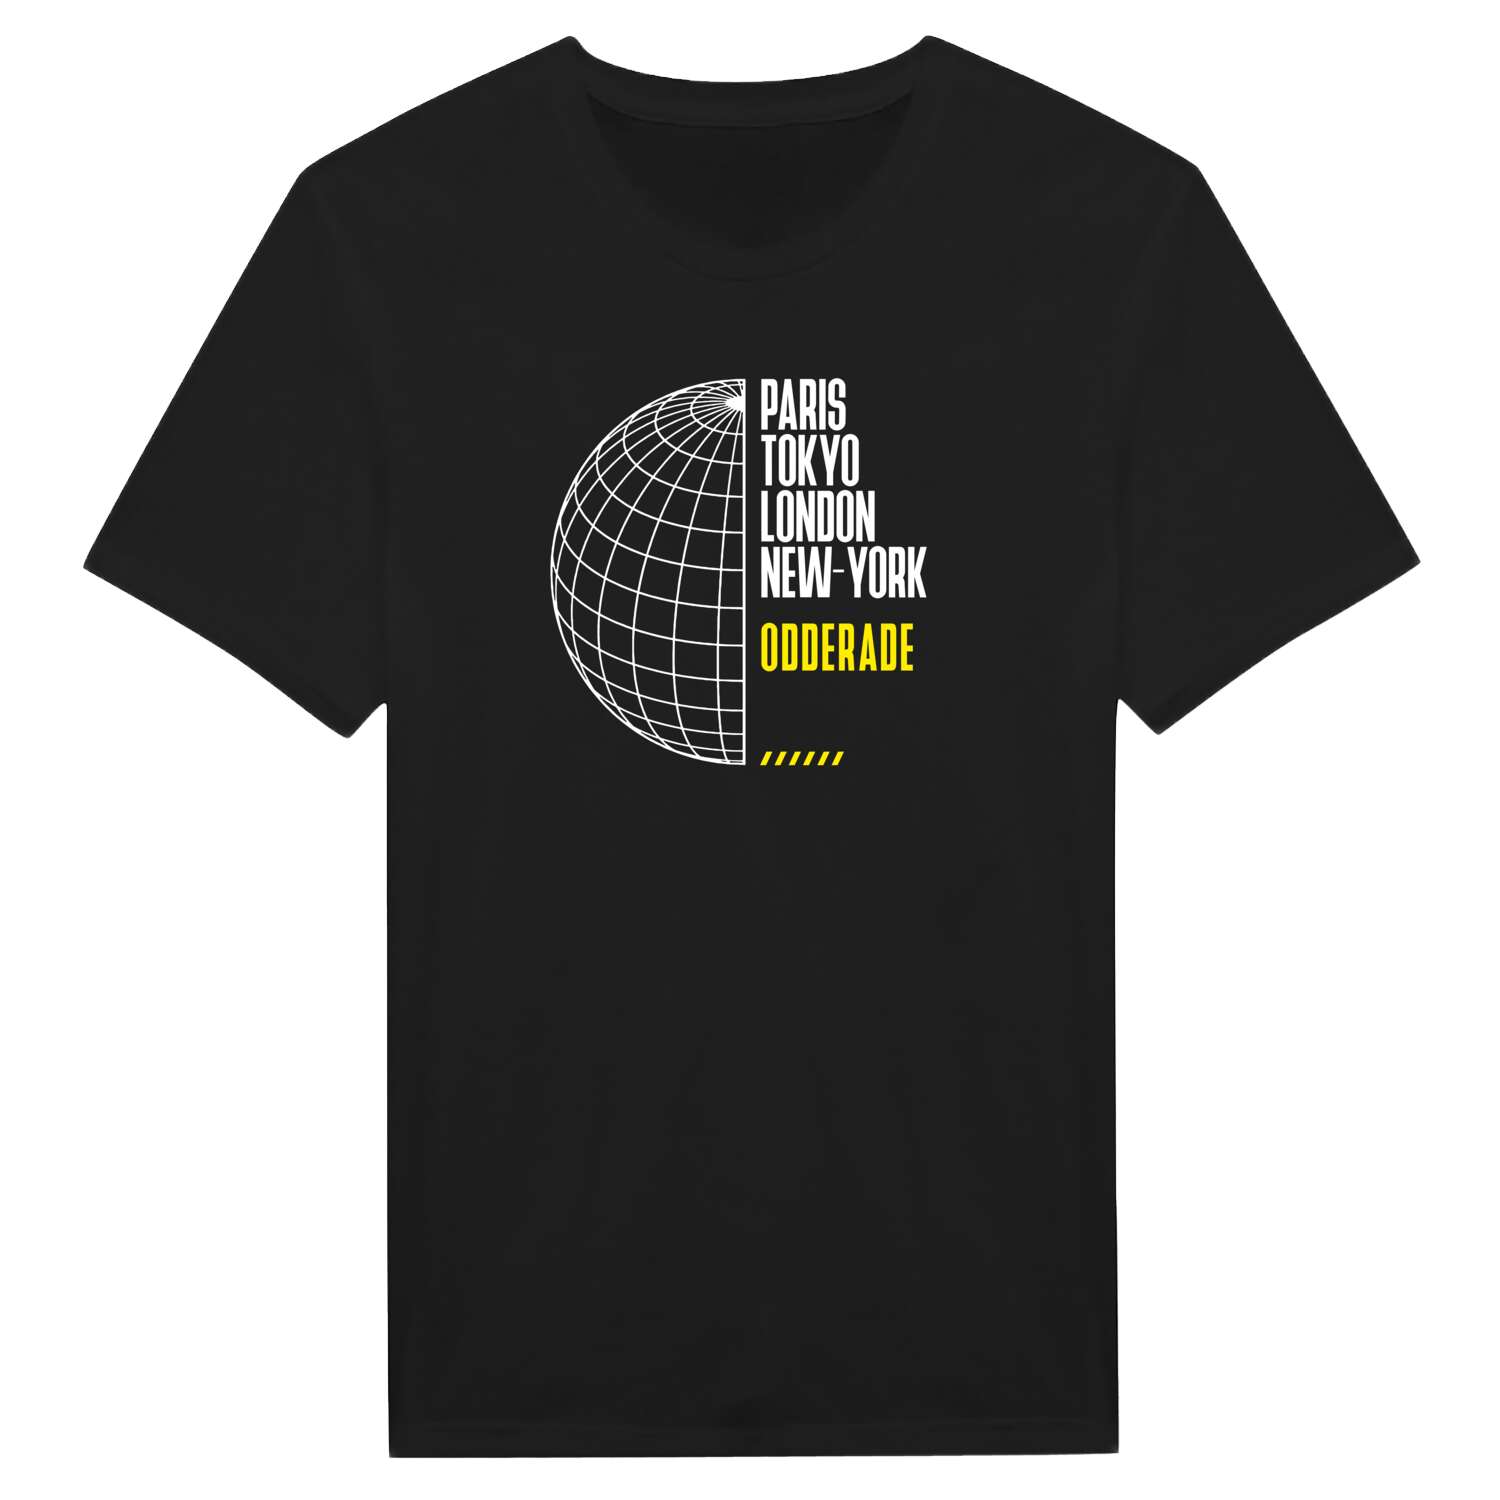 Odderade T-Shirt »Paris Tokyo London«